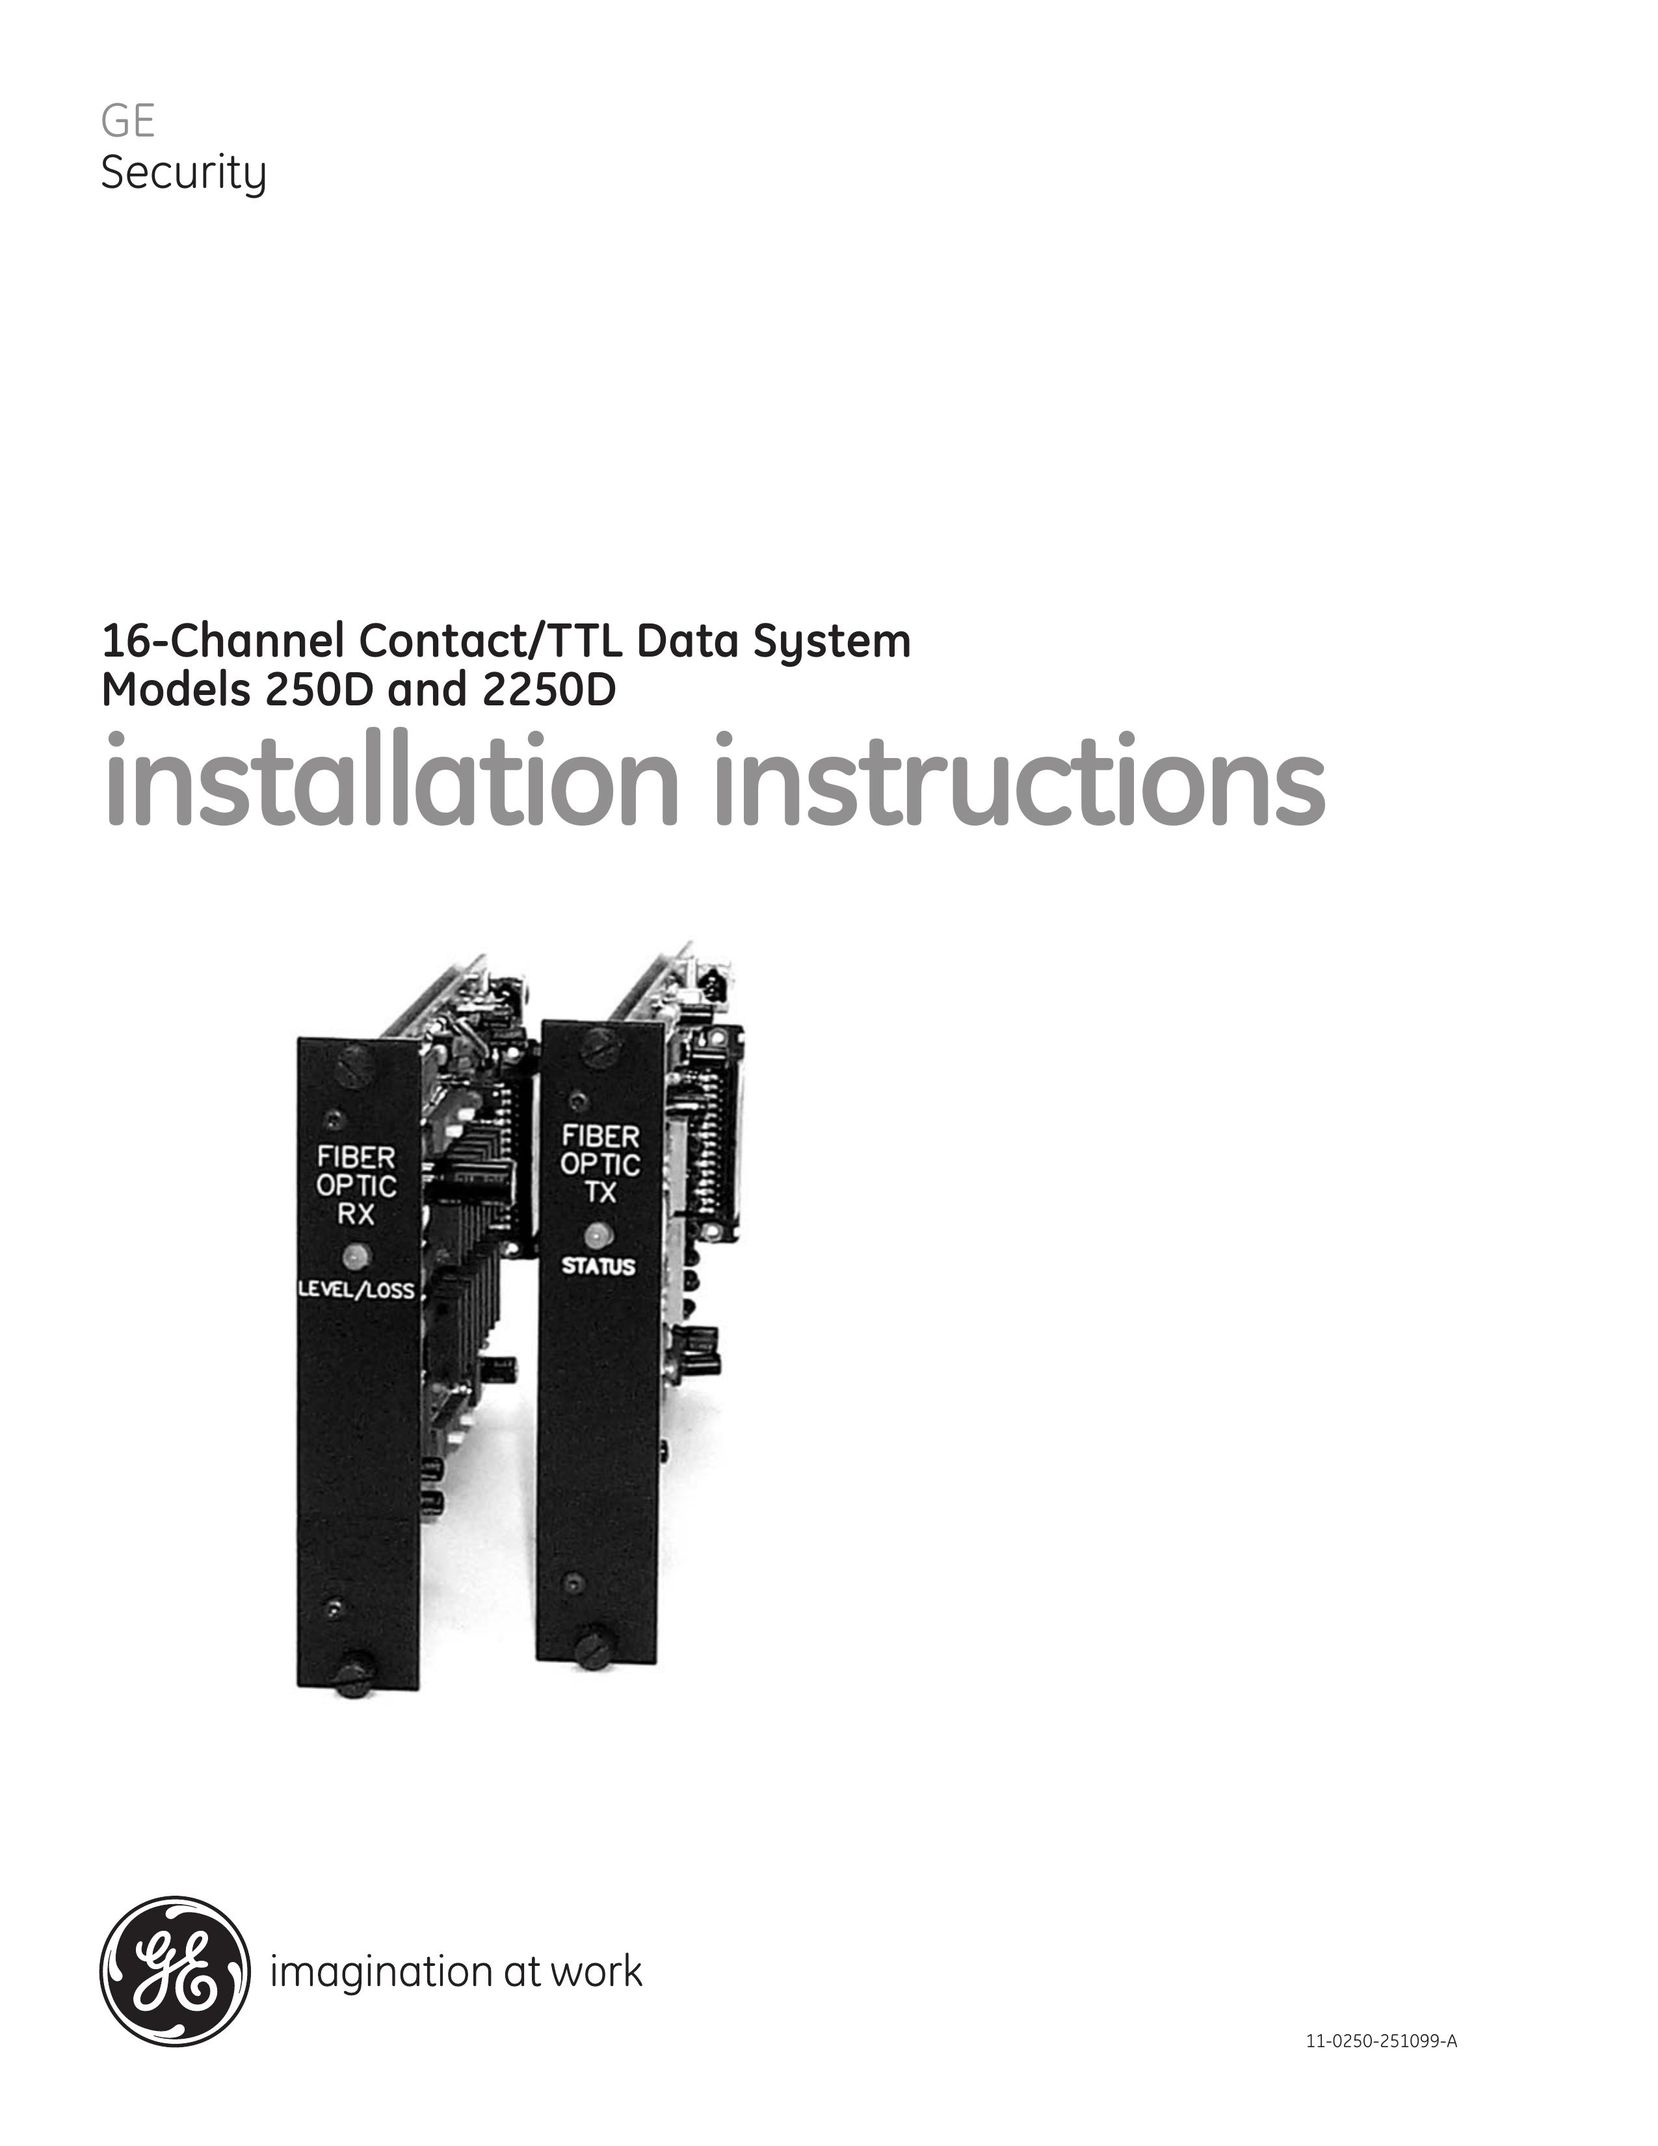 GE 2250D Network Hardware User Manual